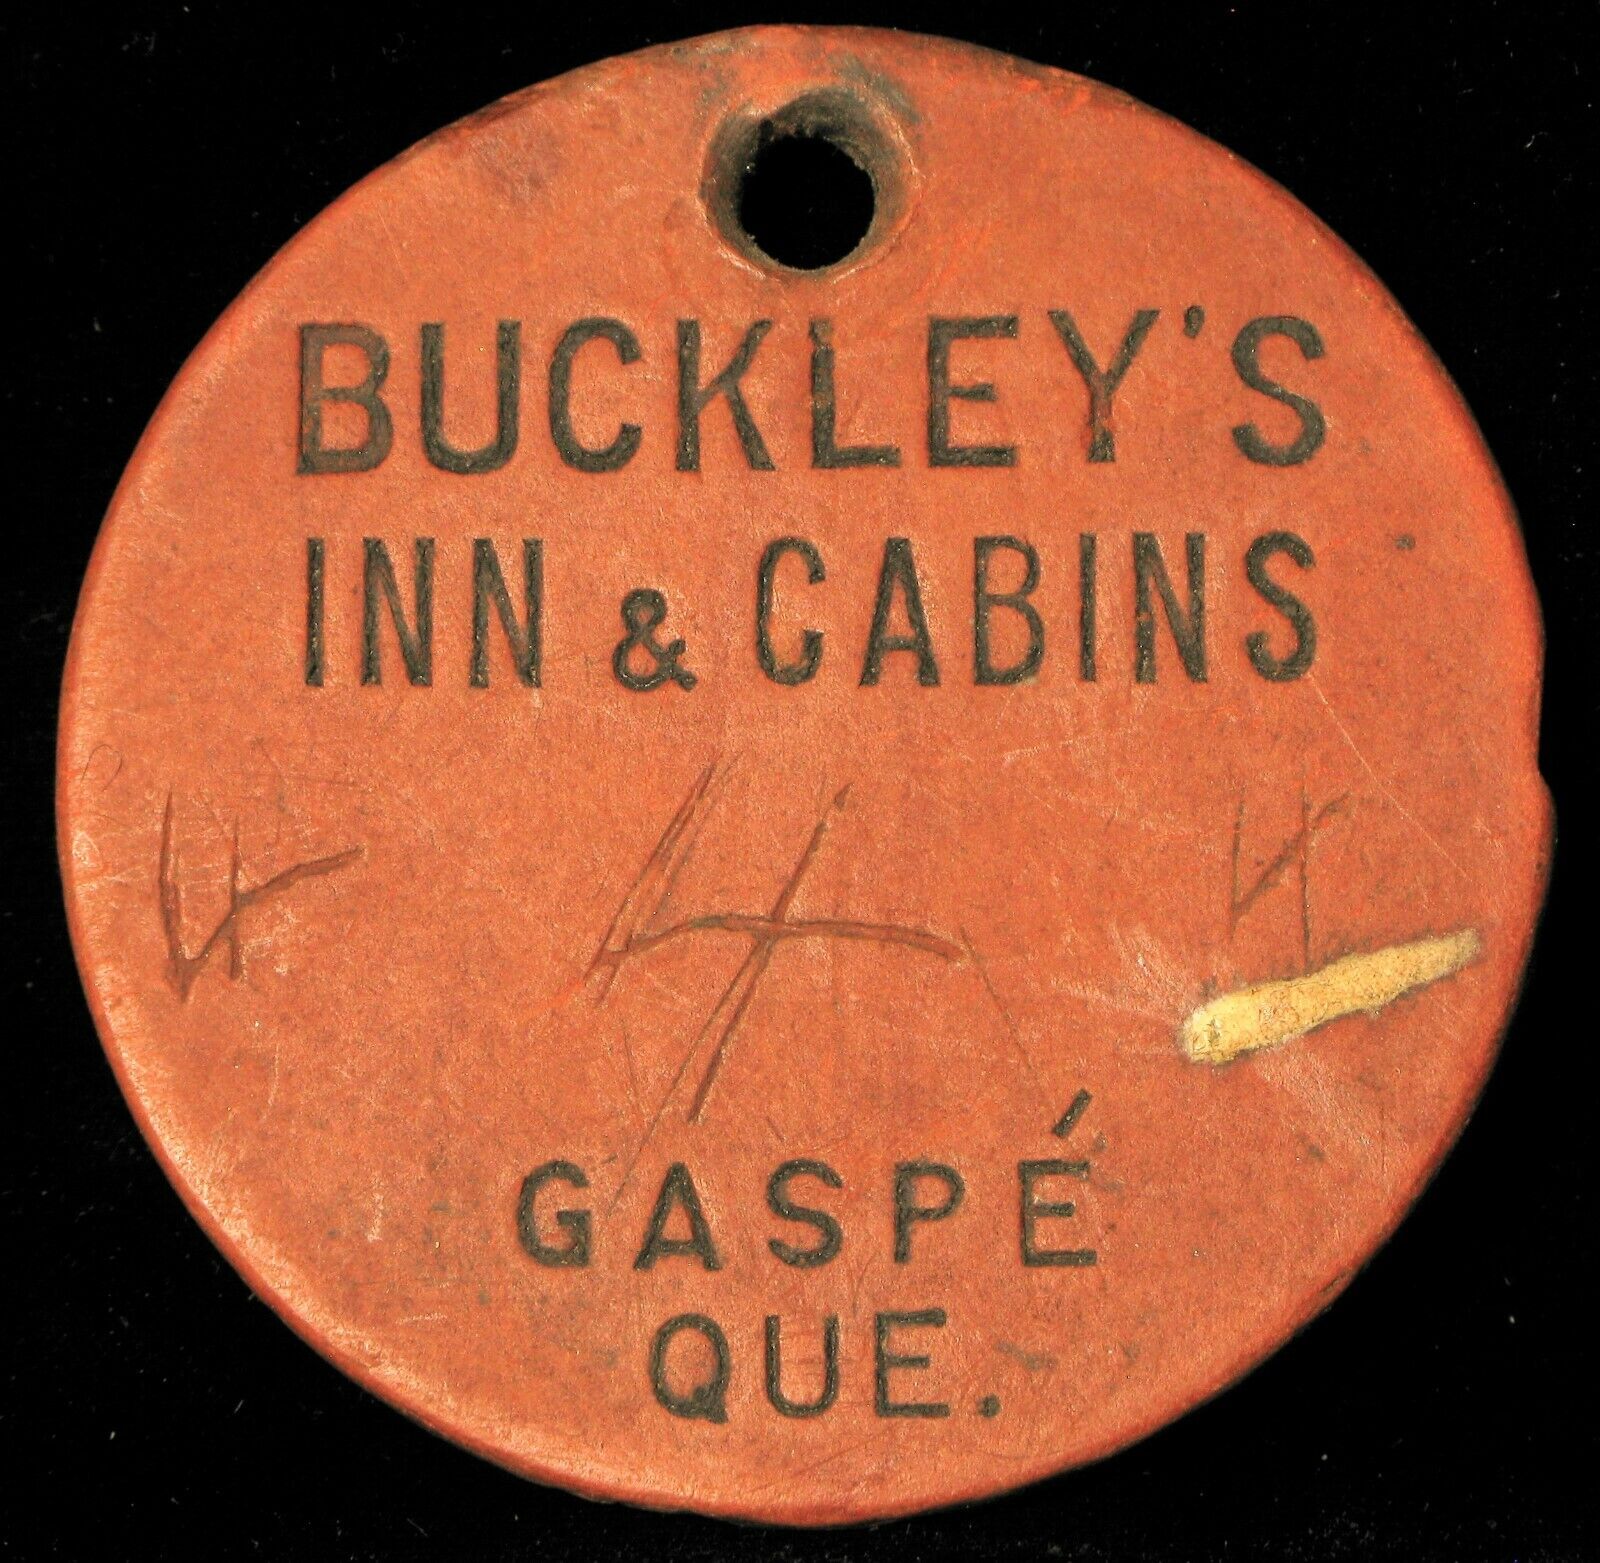 ANTIQUE BUCKLEY\'S INN & CABINS GASPE QUEBEC CANADA HOTEL LEATHER ROOM KEY FOB 